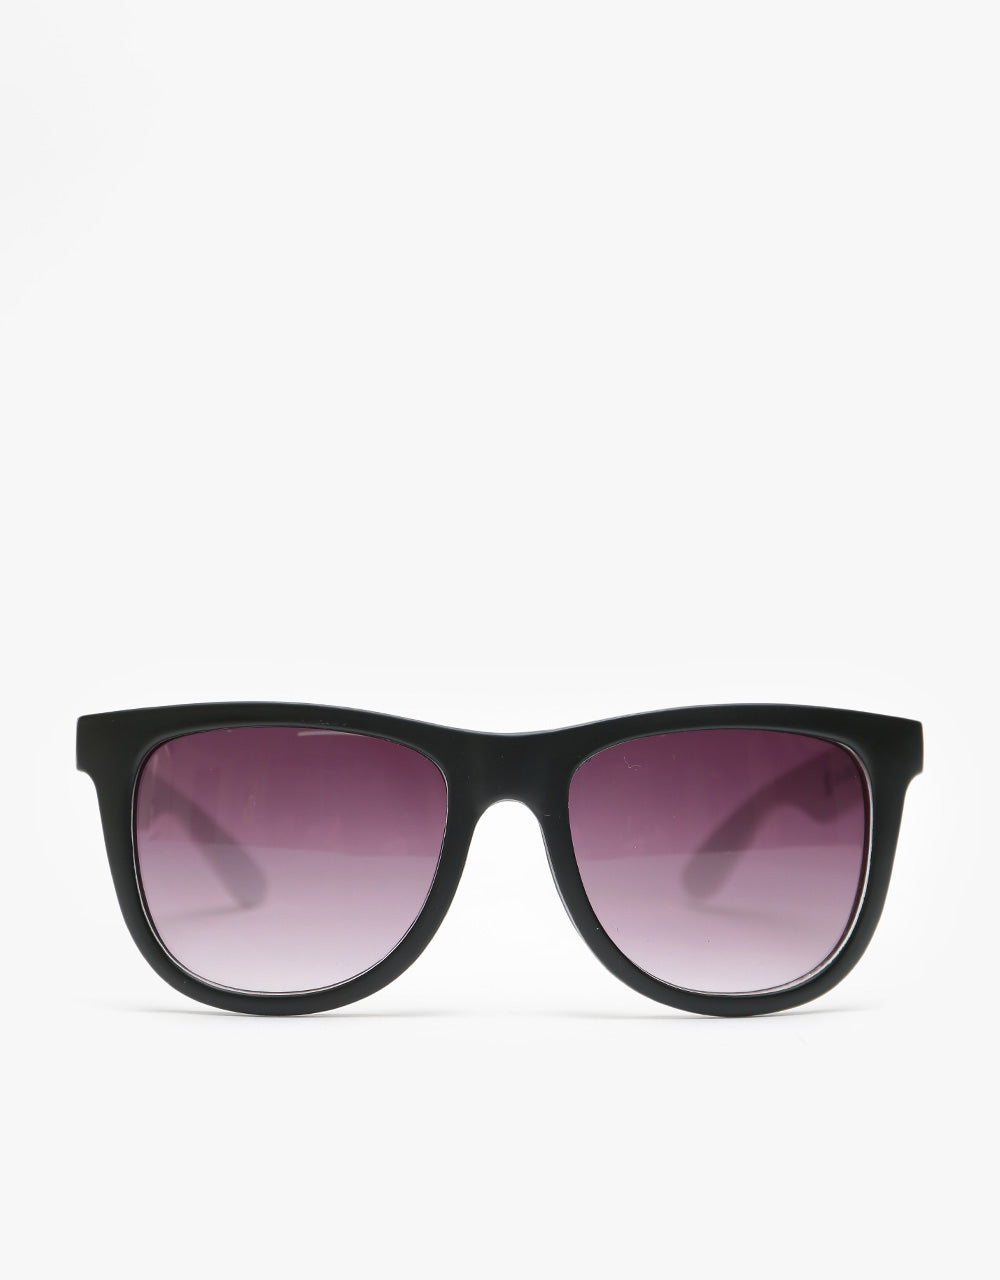 Independent Bar/Cross Sunglasses - Black/White